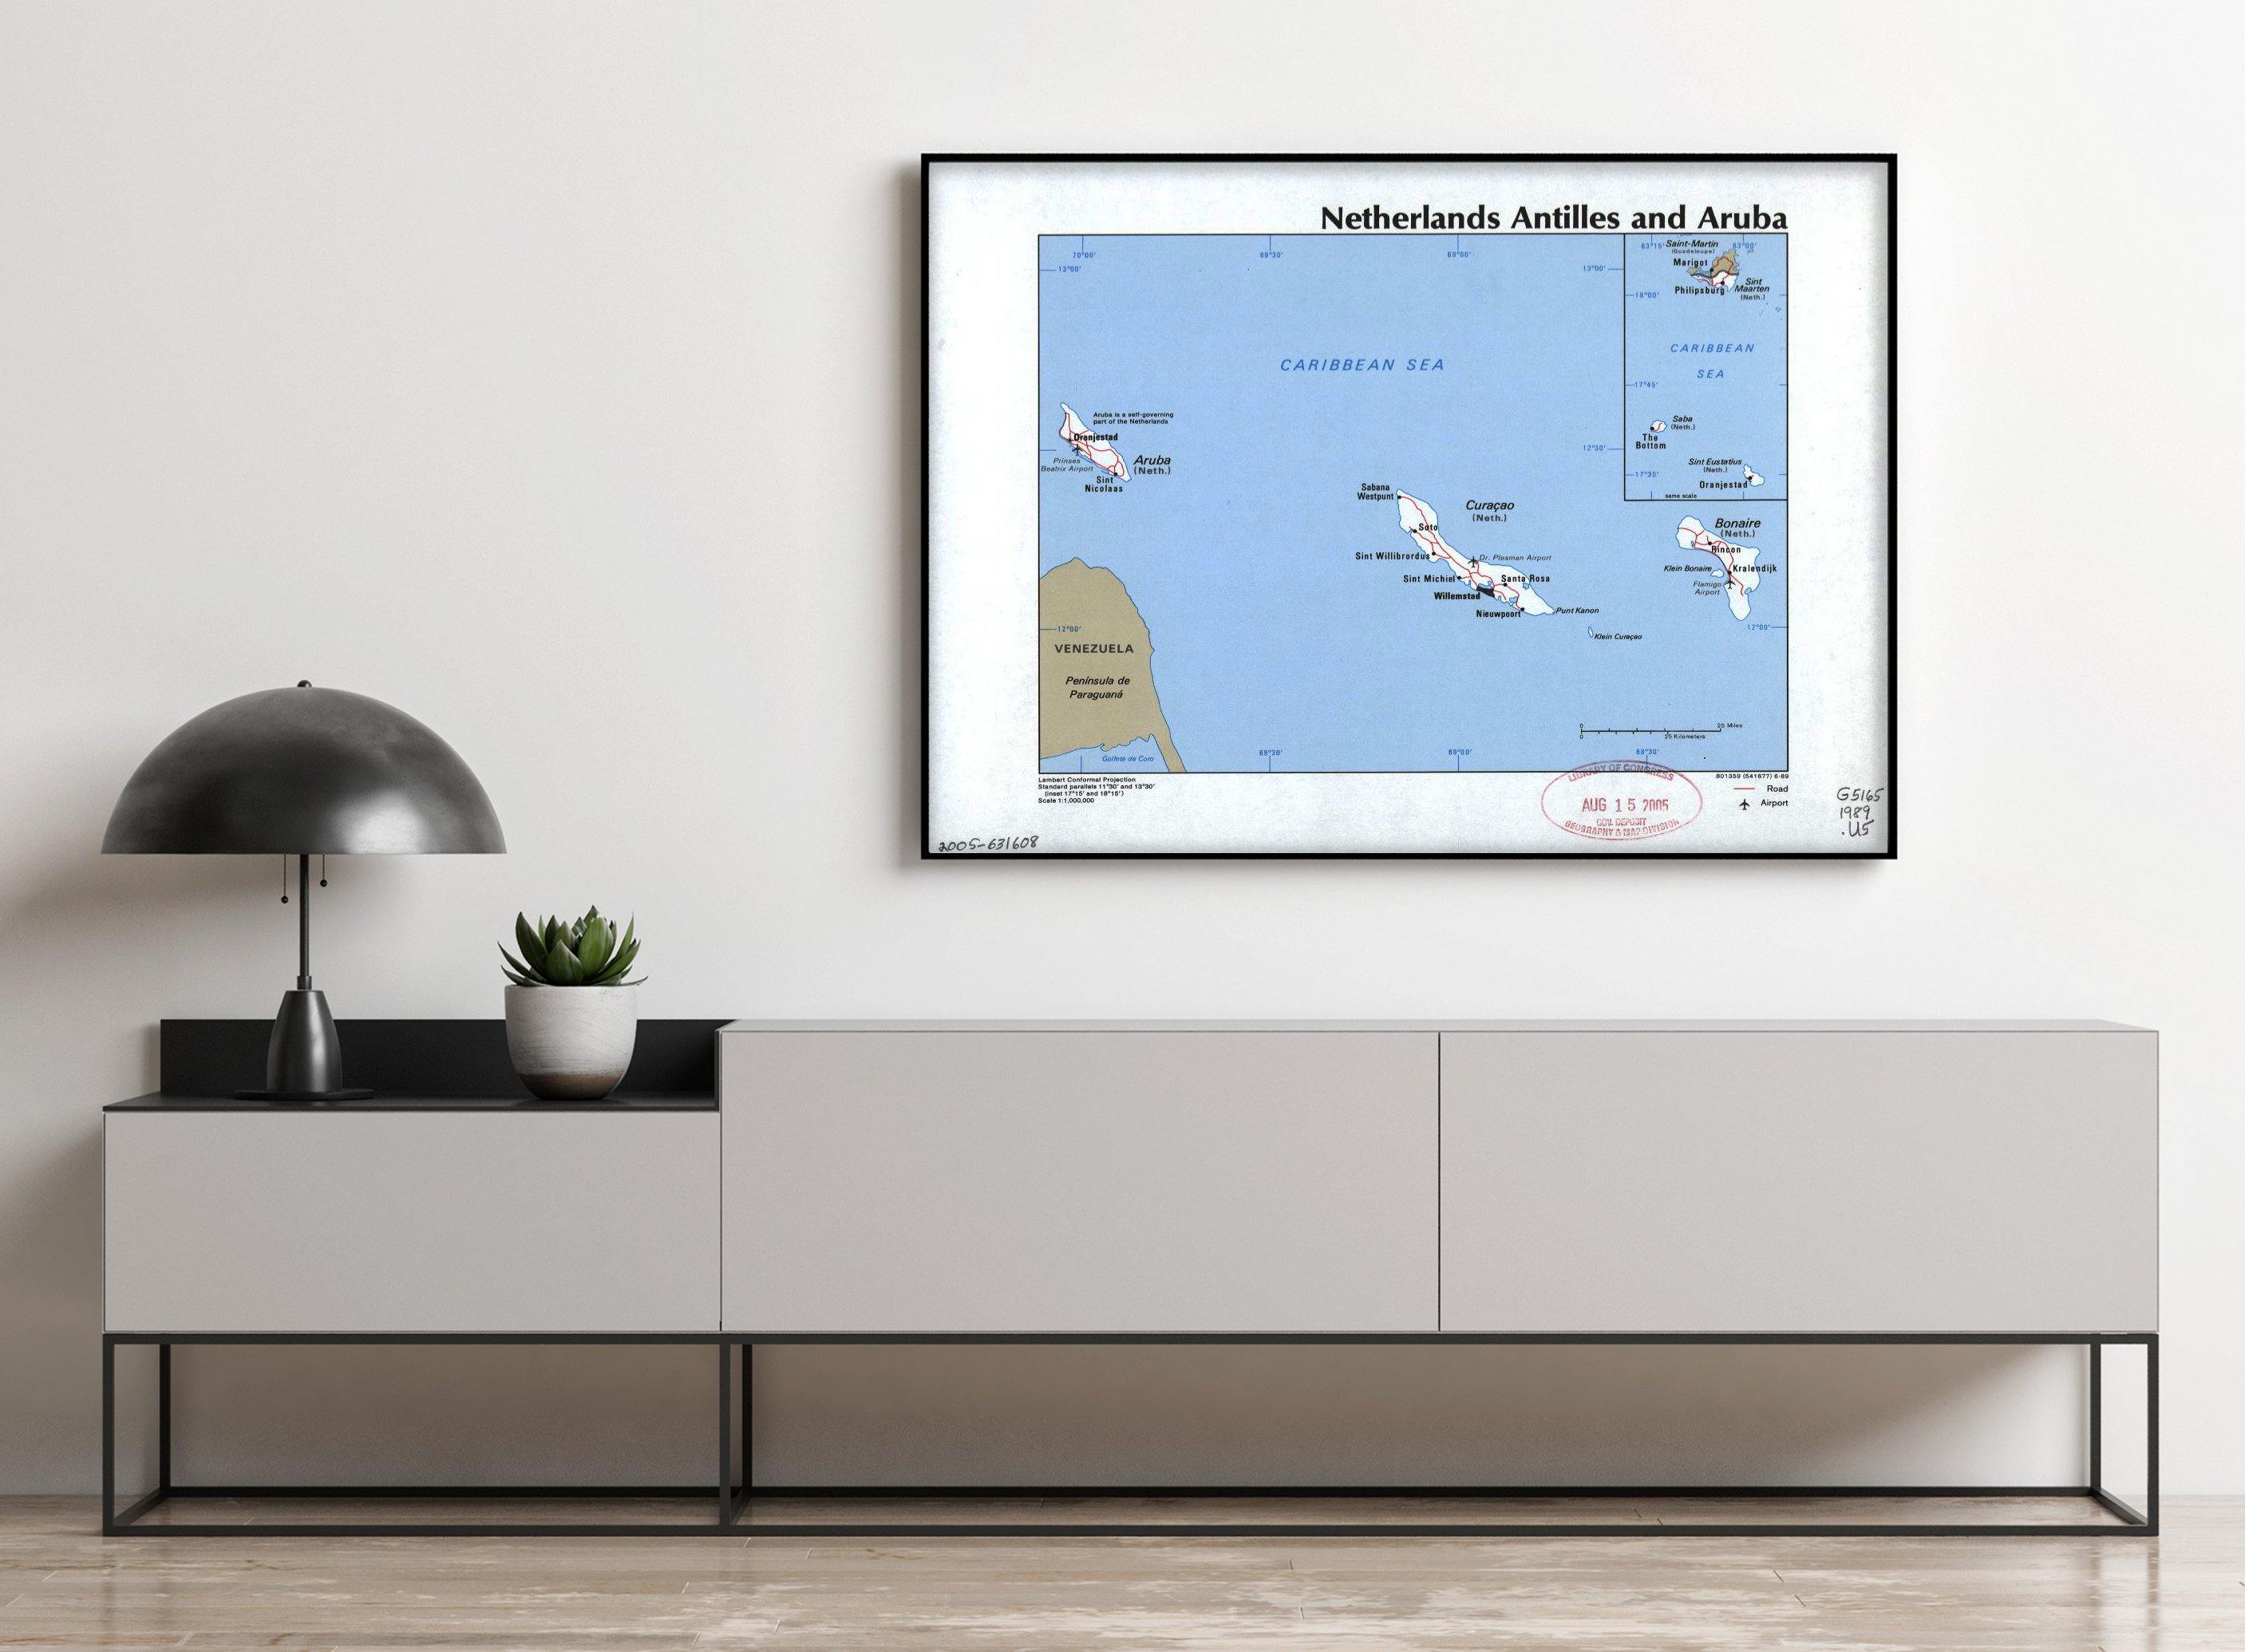 1989 Map| Netherlands Antilles and Aruba| Aruba|Netherlands Antilles M - New York Map Company